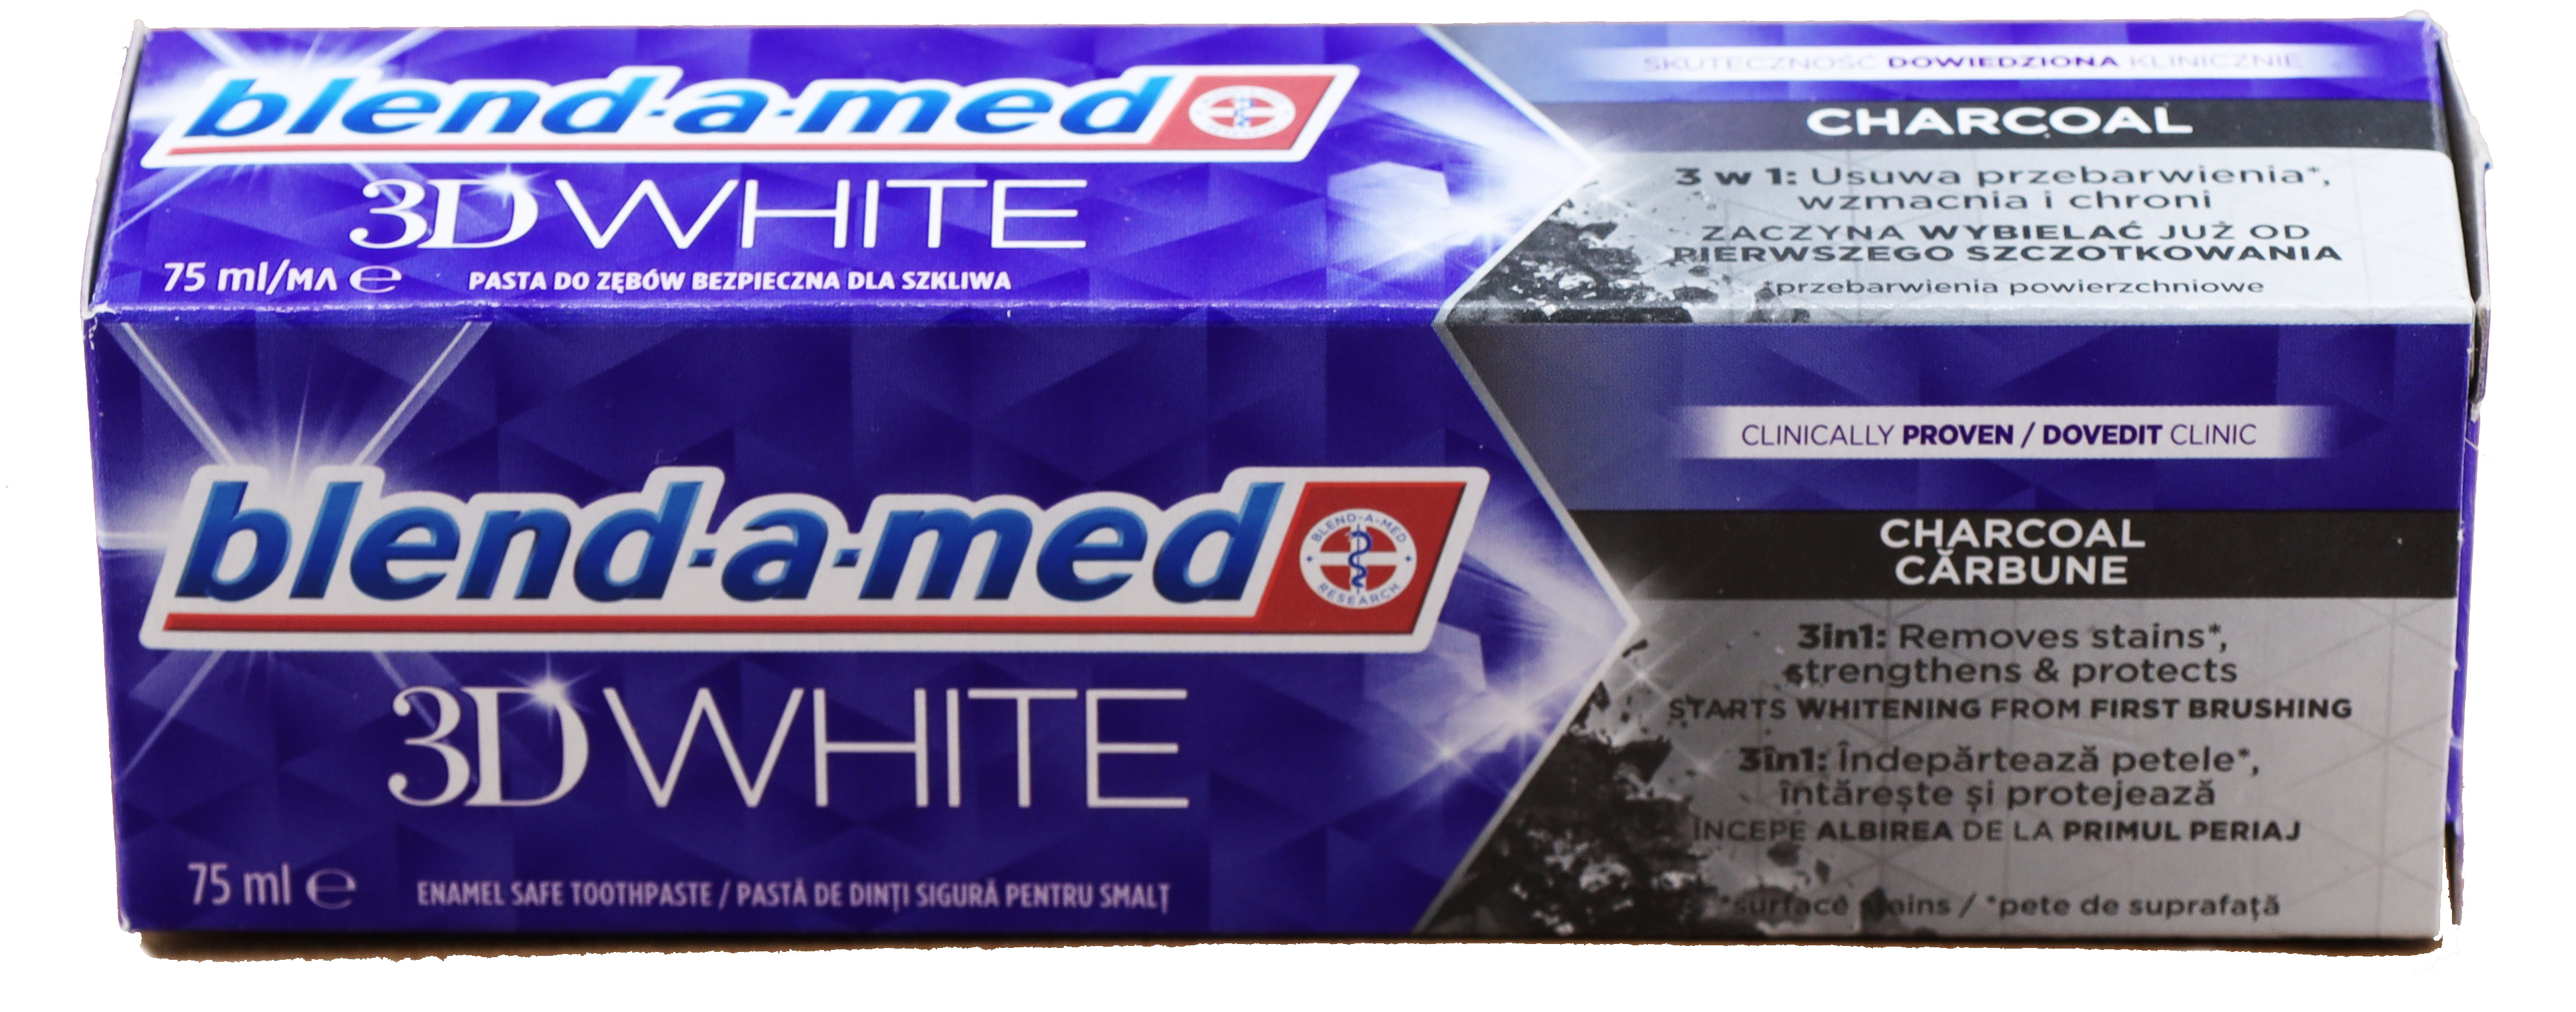 blend-a-med 3D White Zahnpasta mit Aktivkohle 75ml